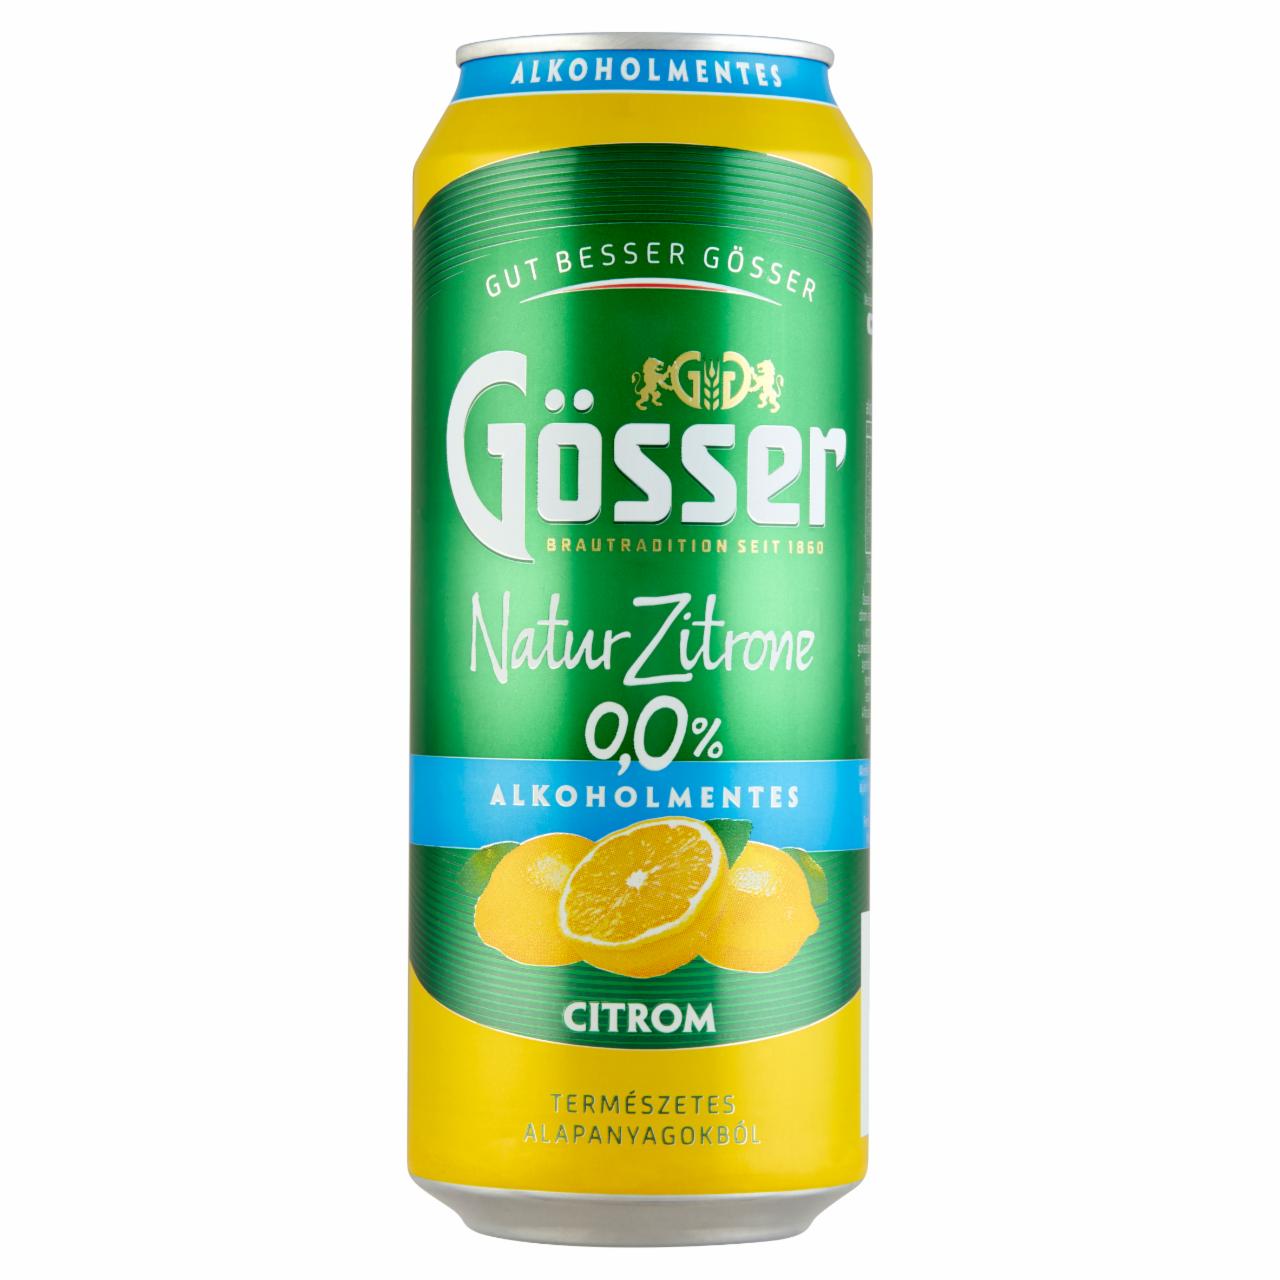 Képek - Gösser Natur Zitrone citromos alkoholmentes sörital 0% 0,5 l doboz